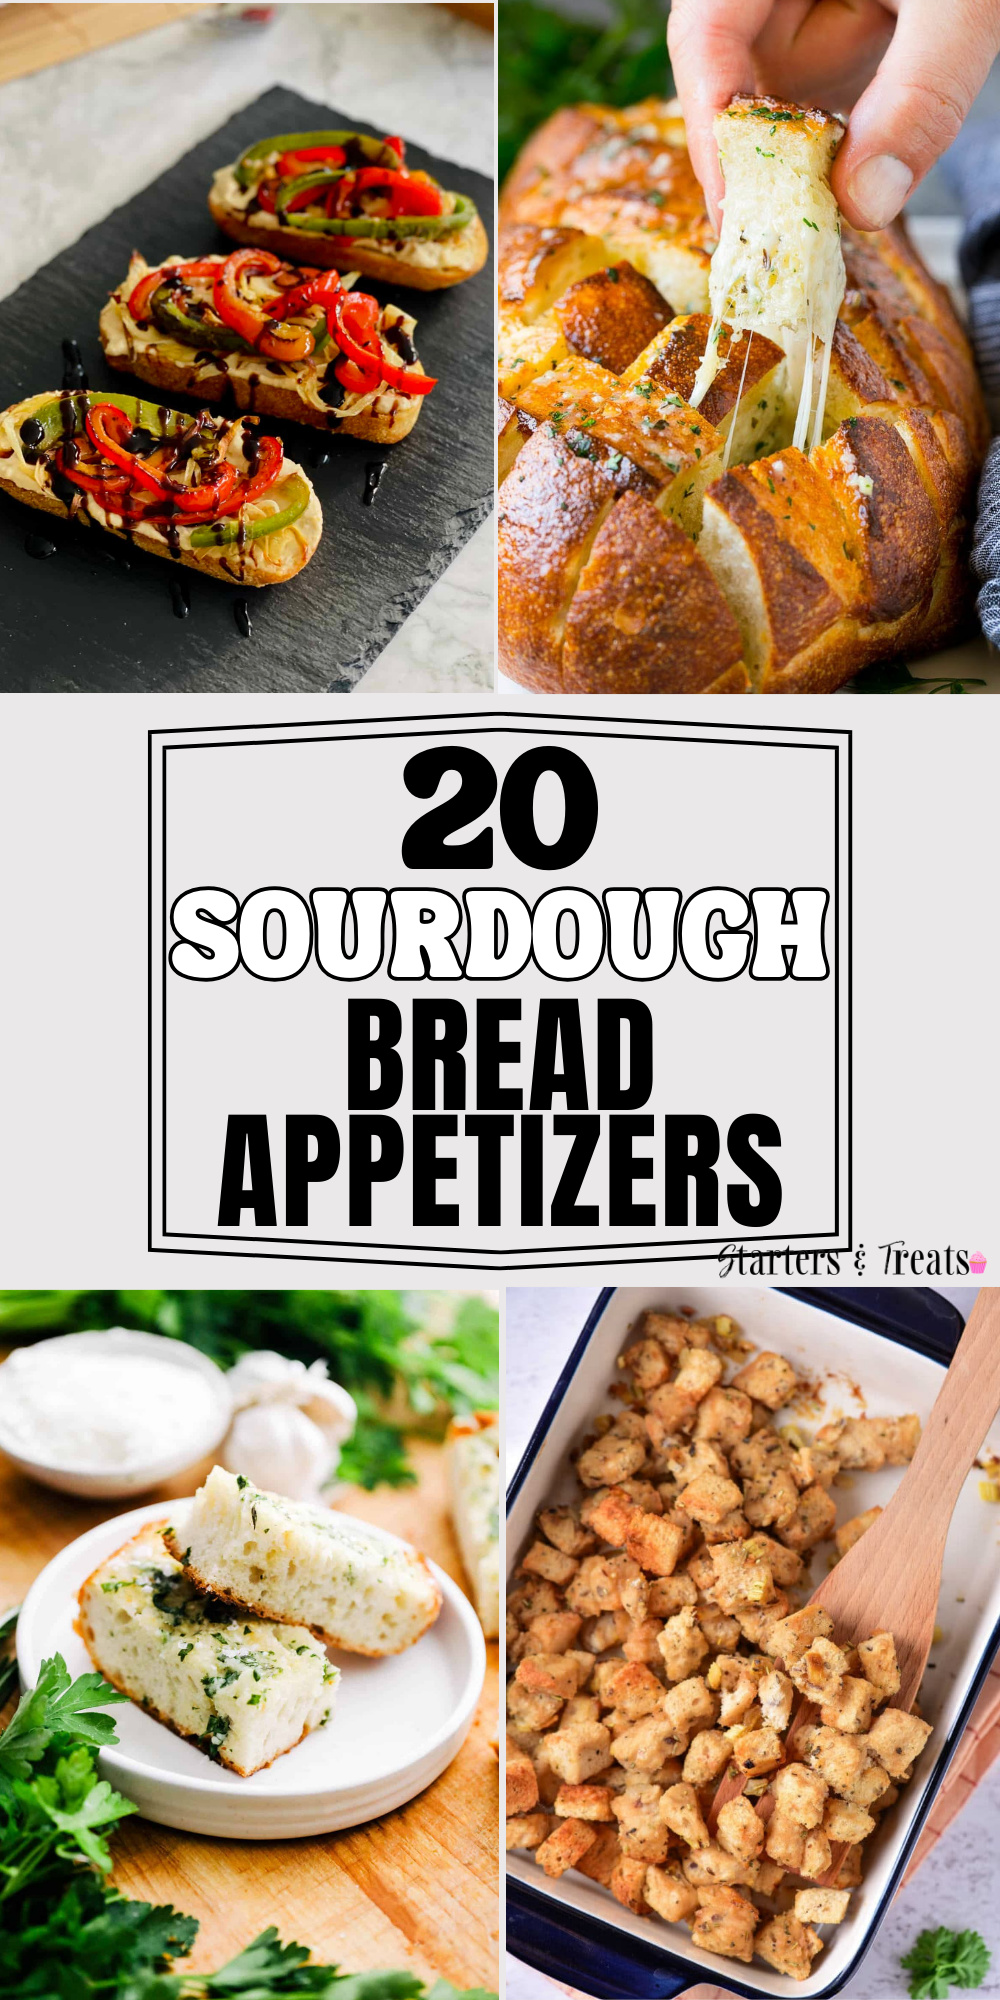 20 Sourdough Bread Appetizers